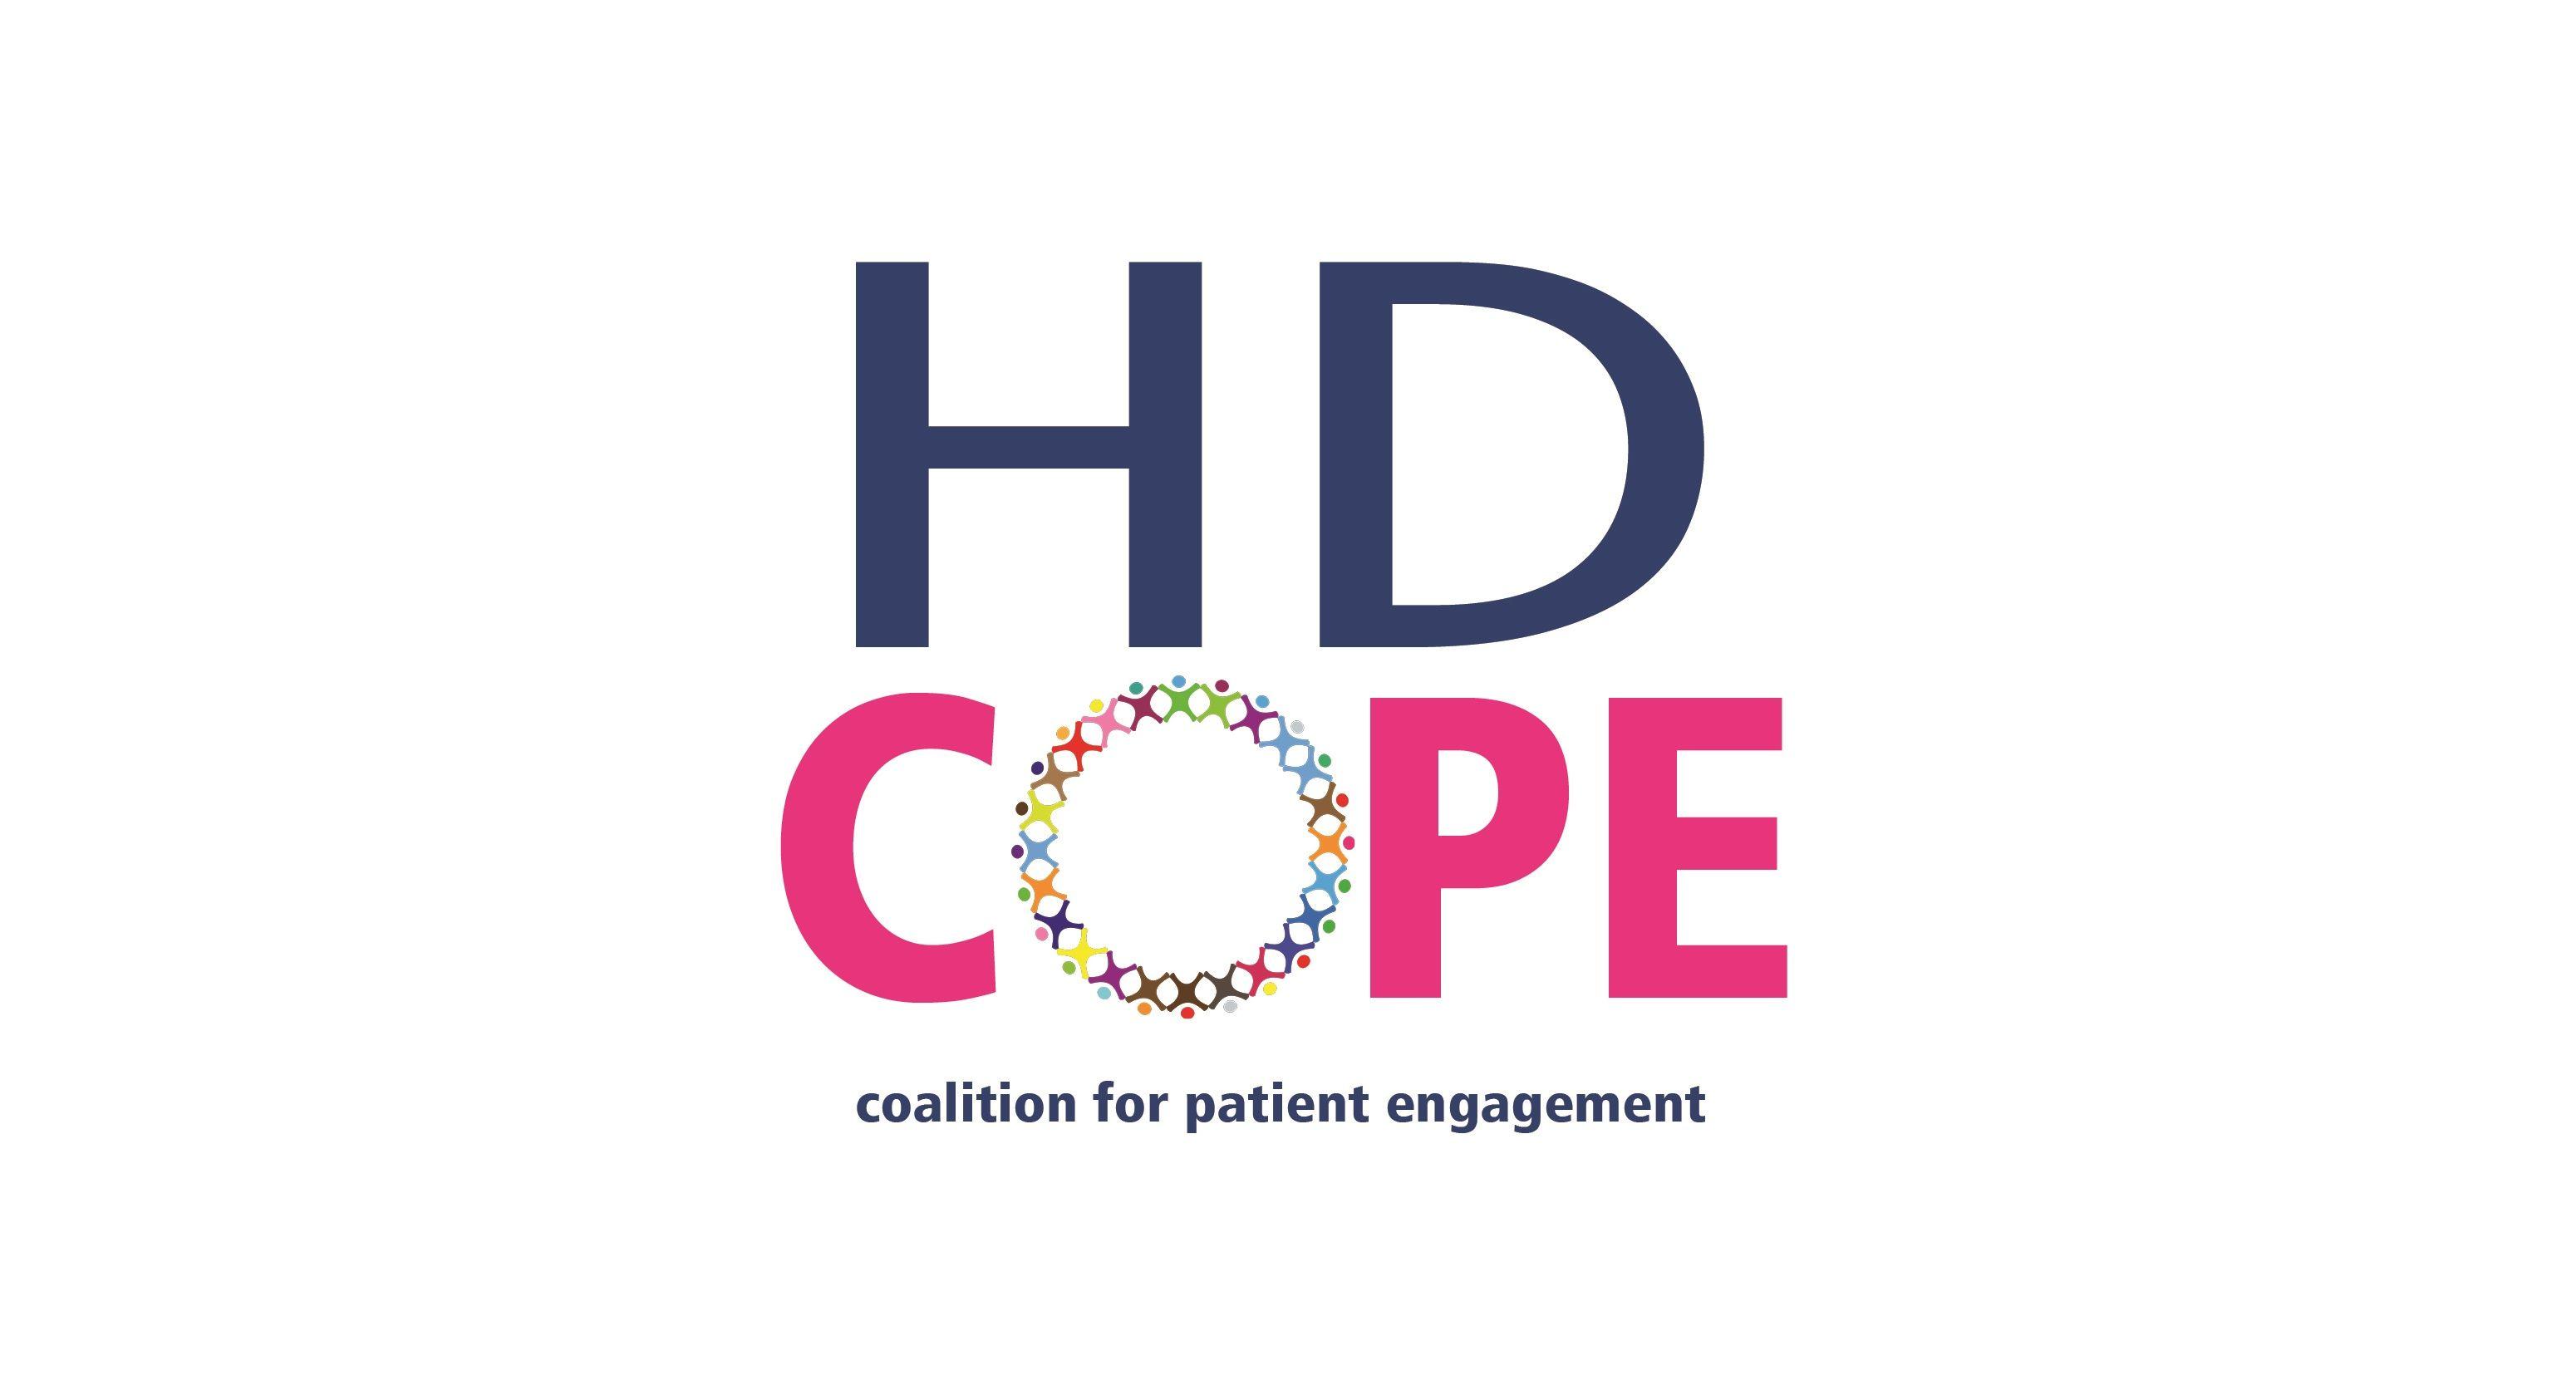 Cope Logo - HD Cope Logo